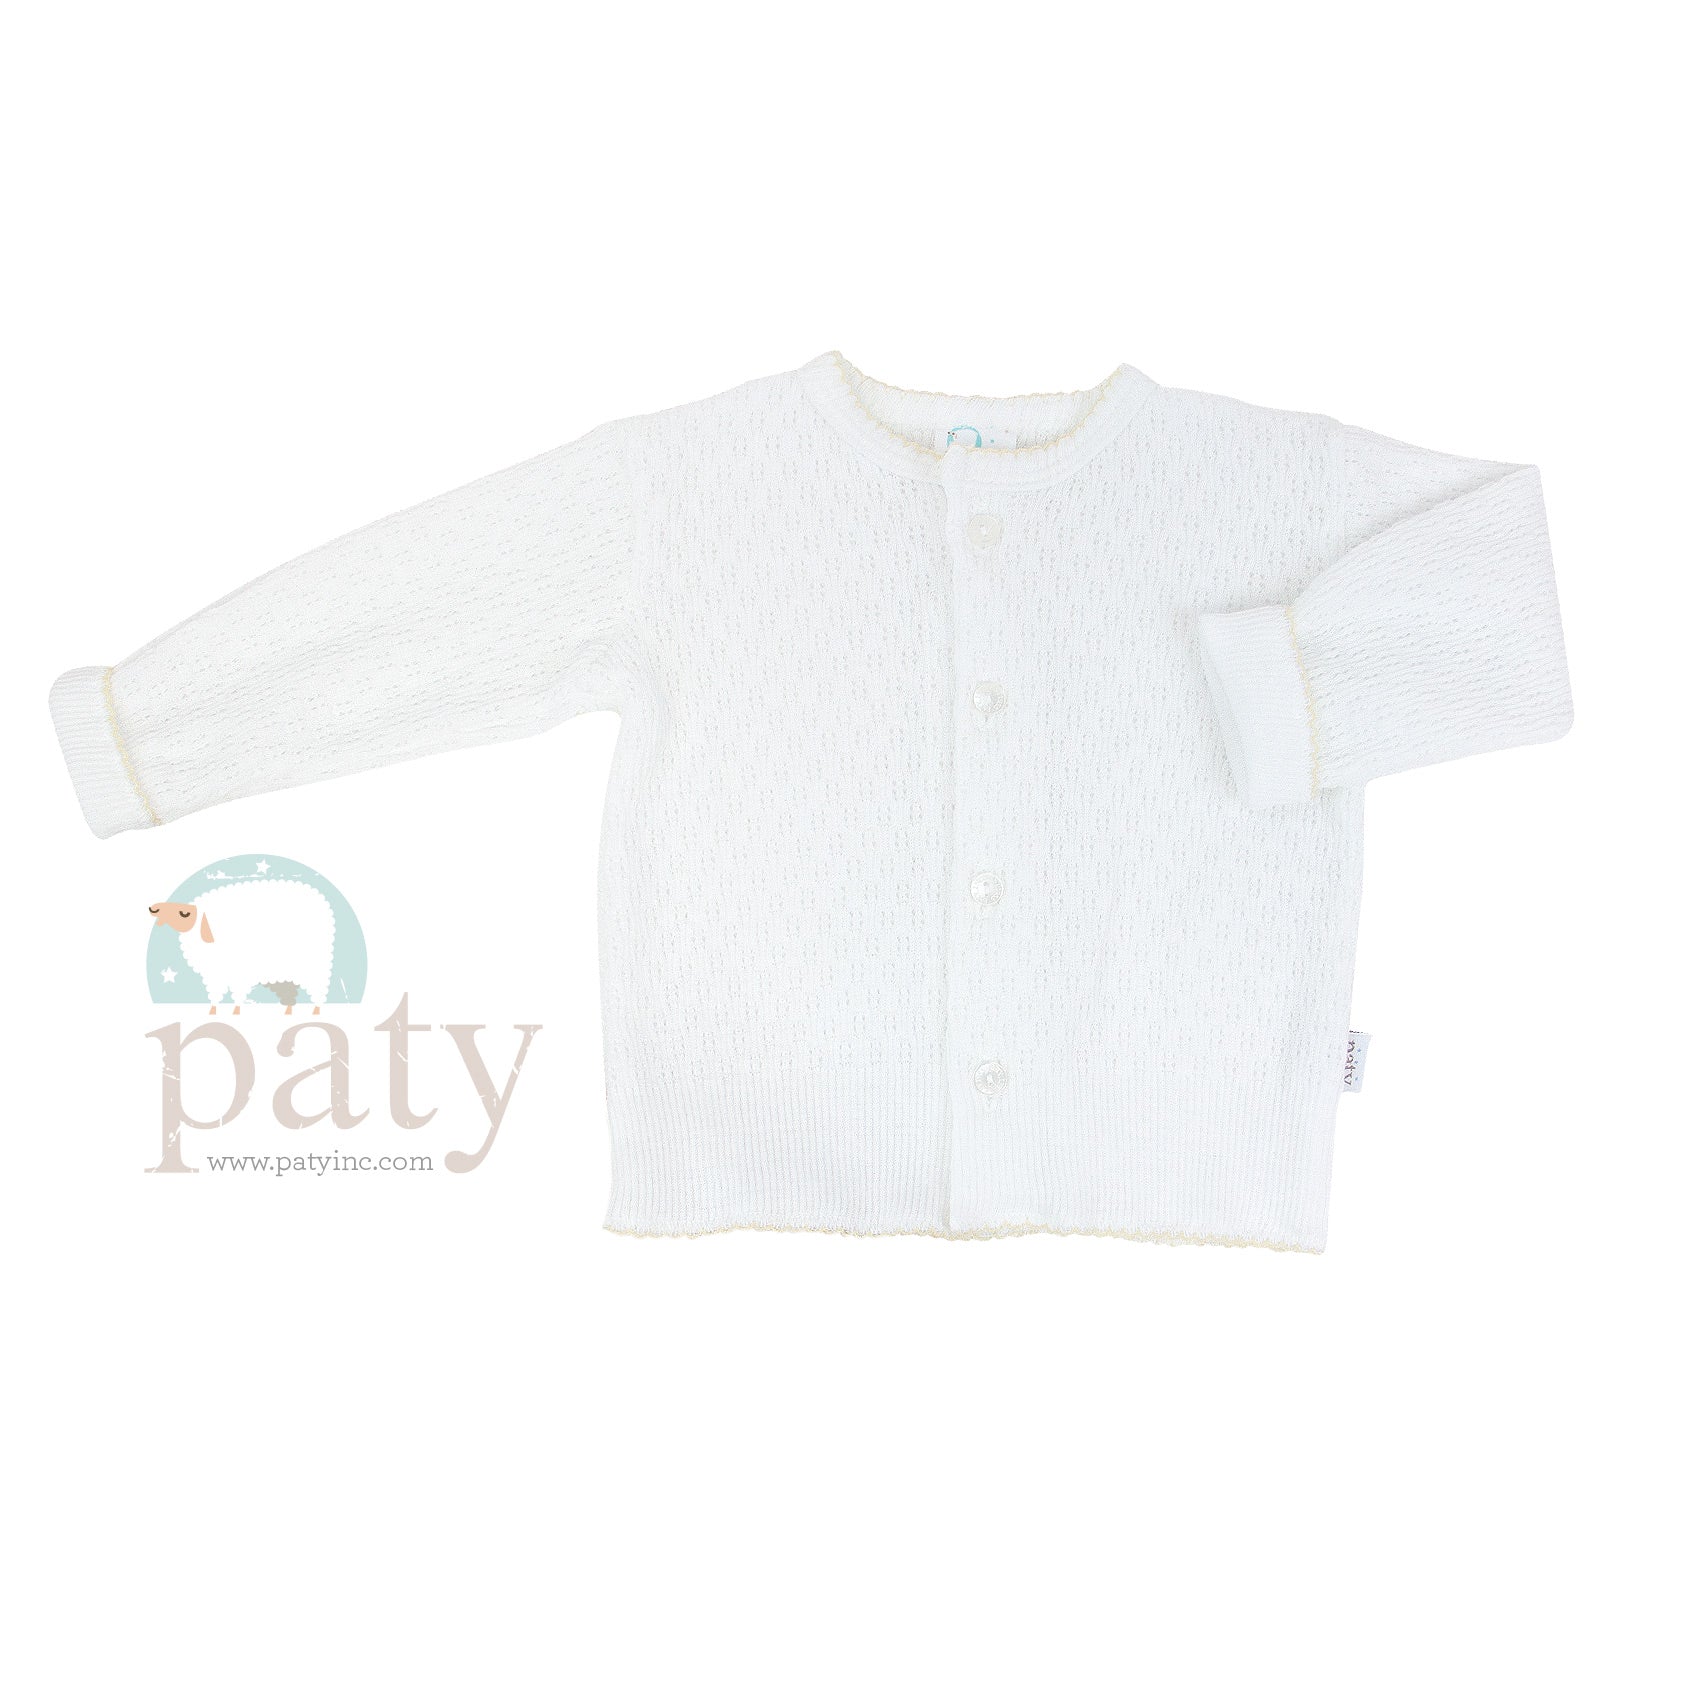 Paty Knit LS Button Up White Cardigan Sweater with Ecru Trim